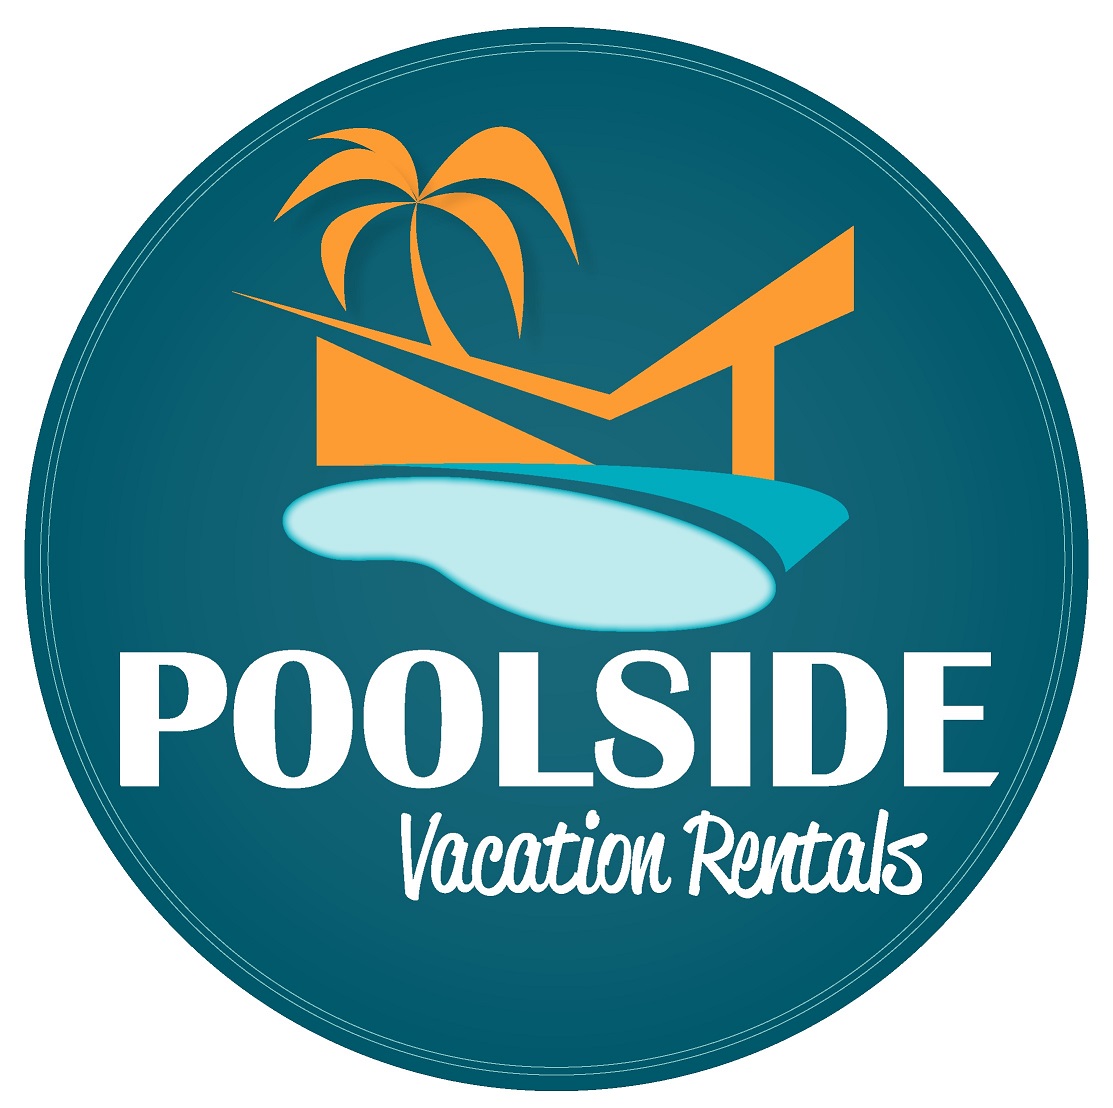 Poolside Vacation Rentals logo